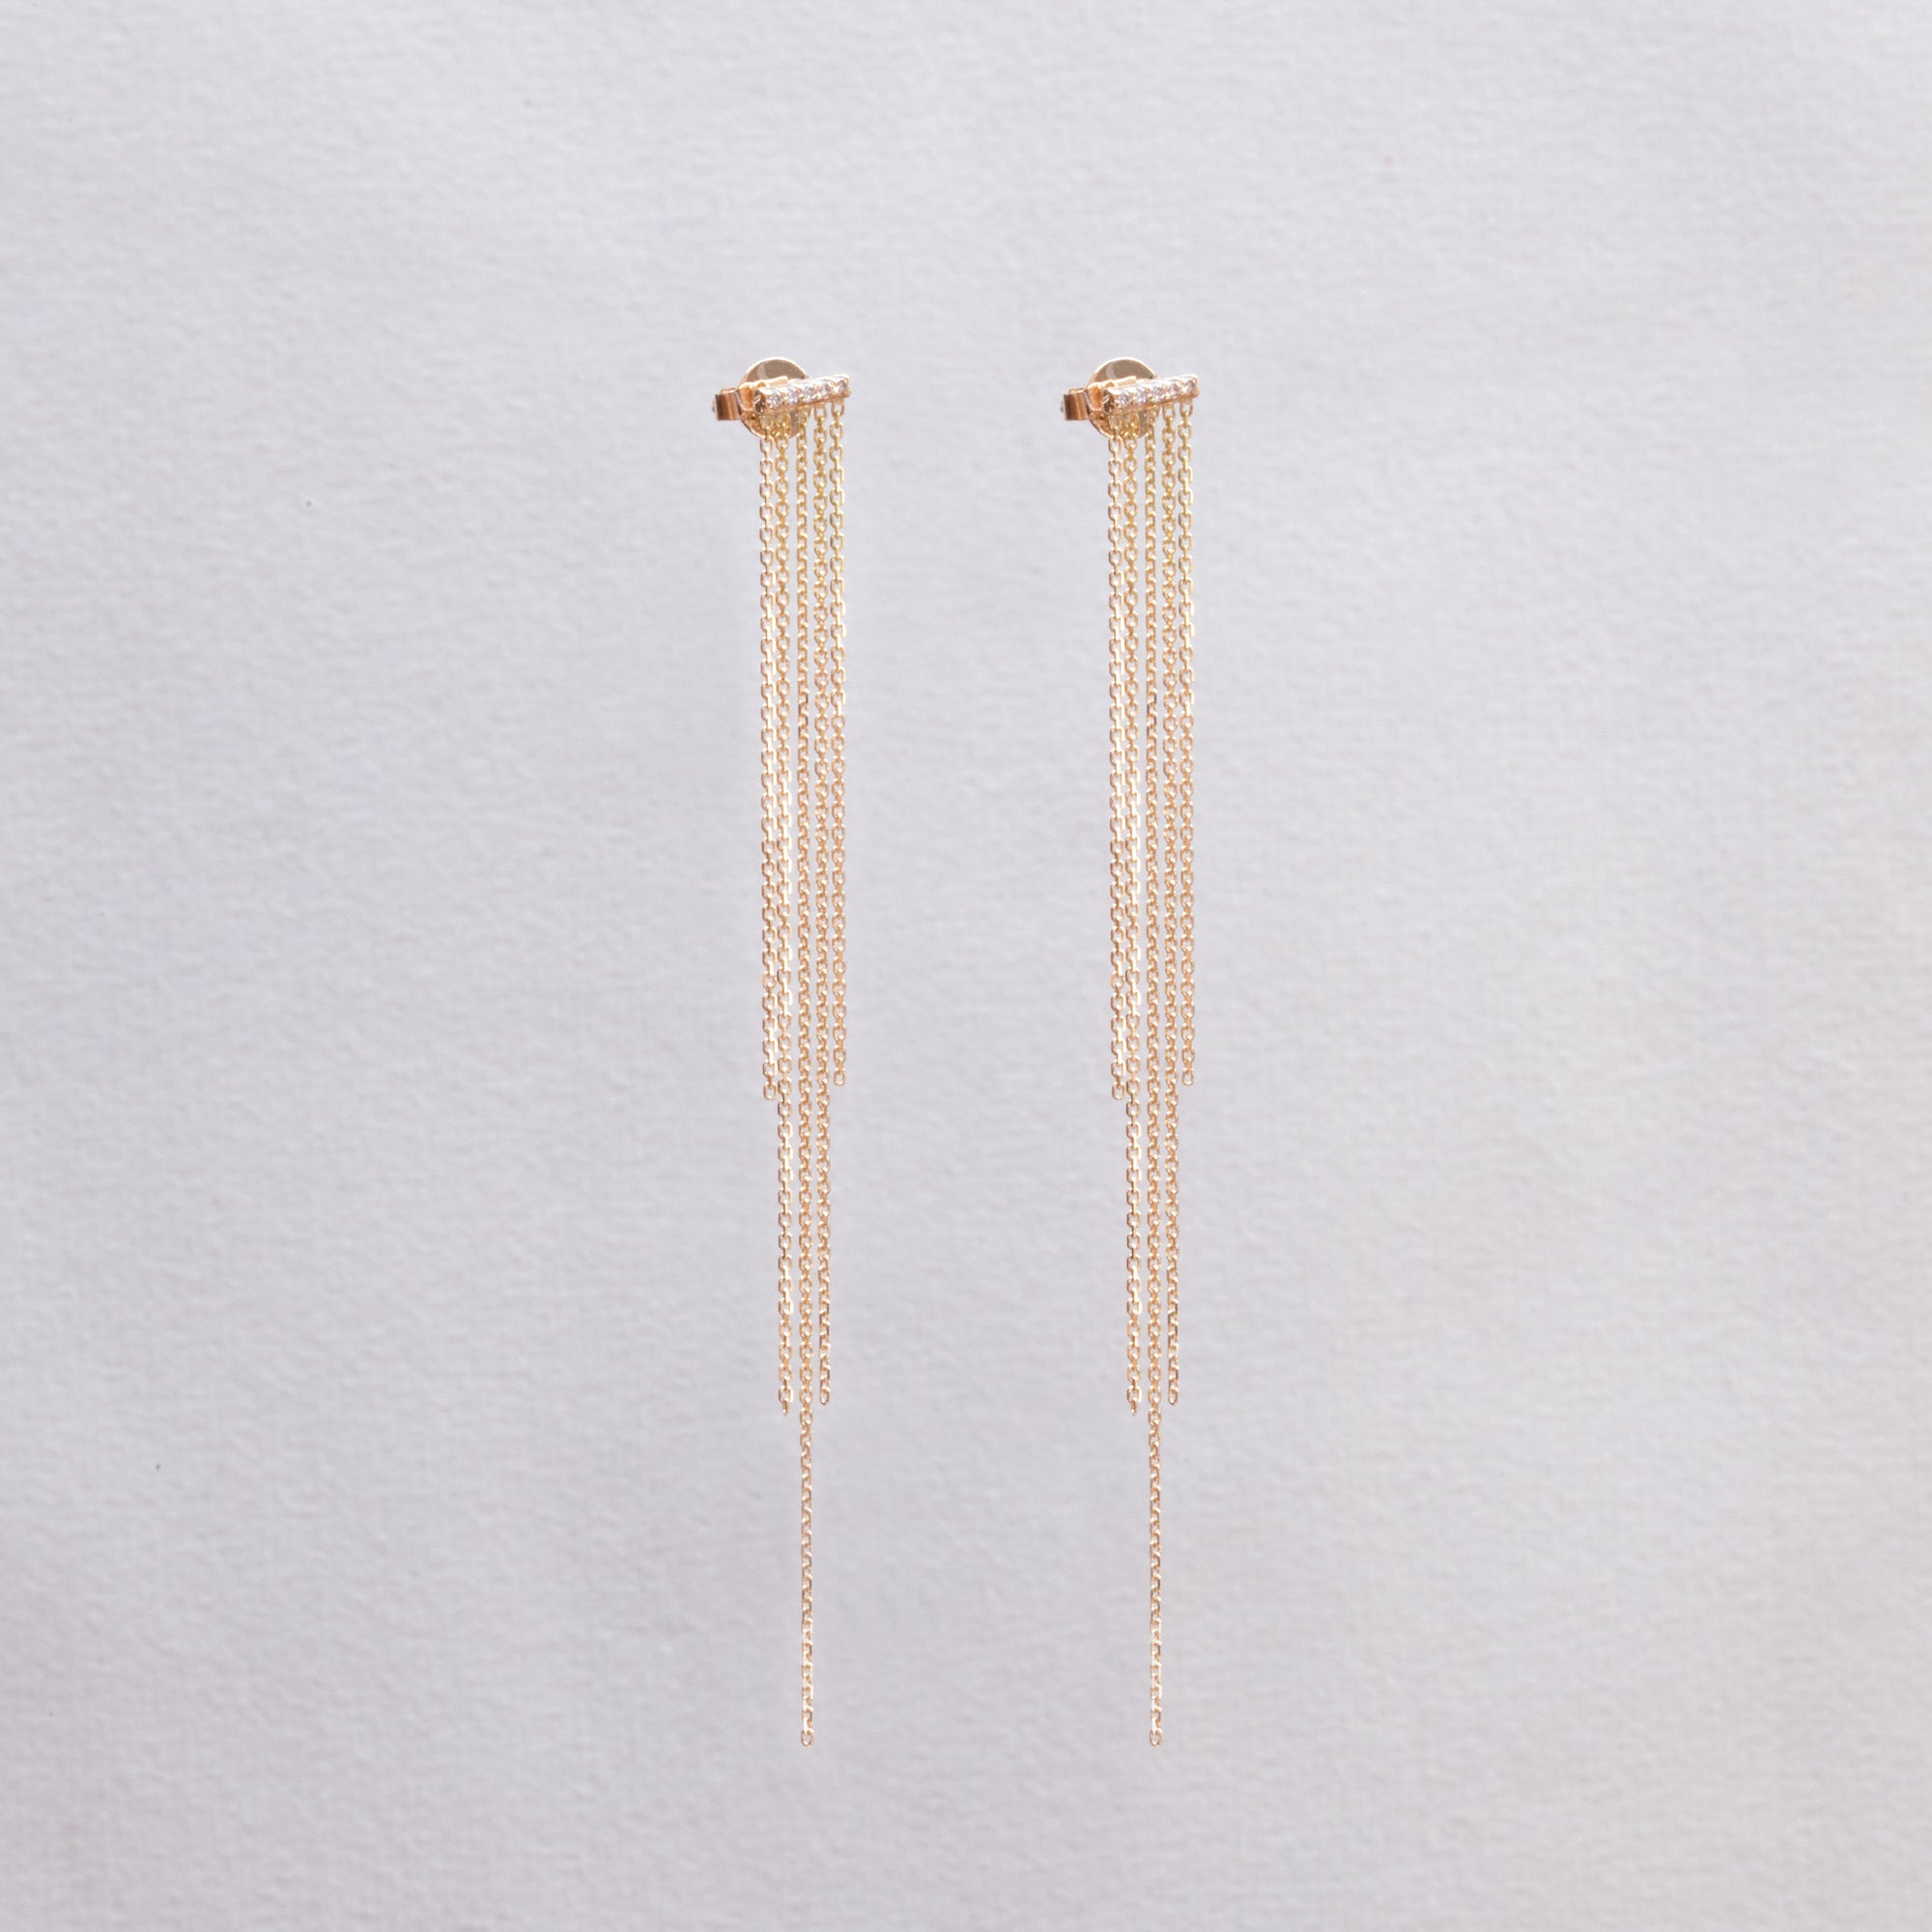 18ct Gold Tassel Stud Earrings with Diamonds